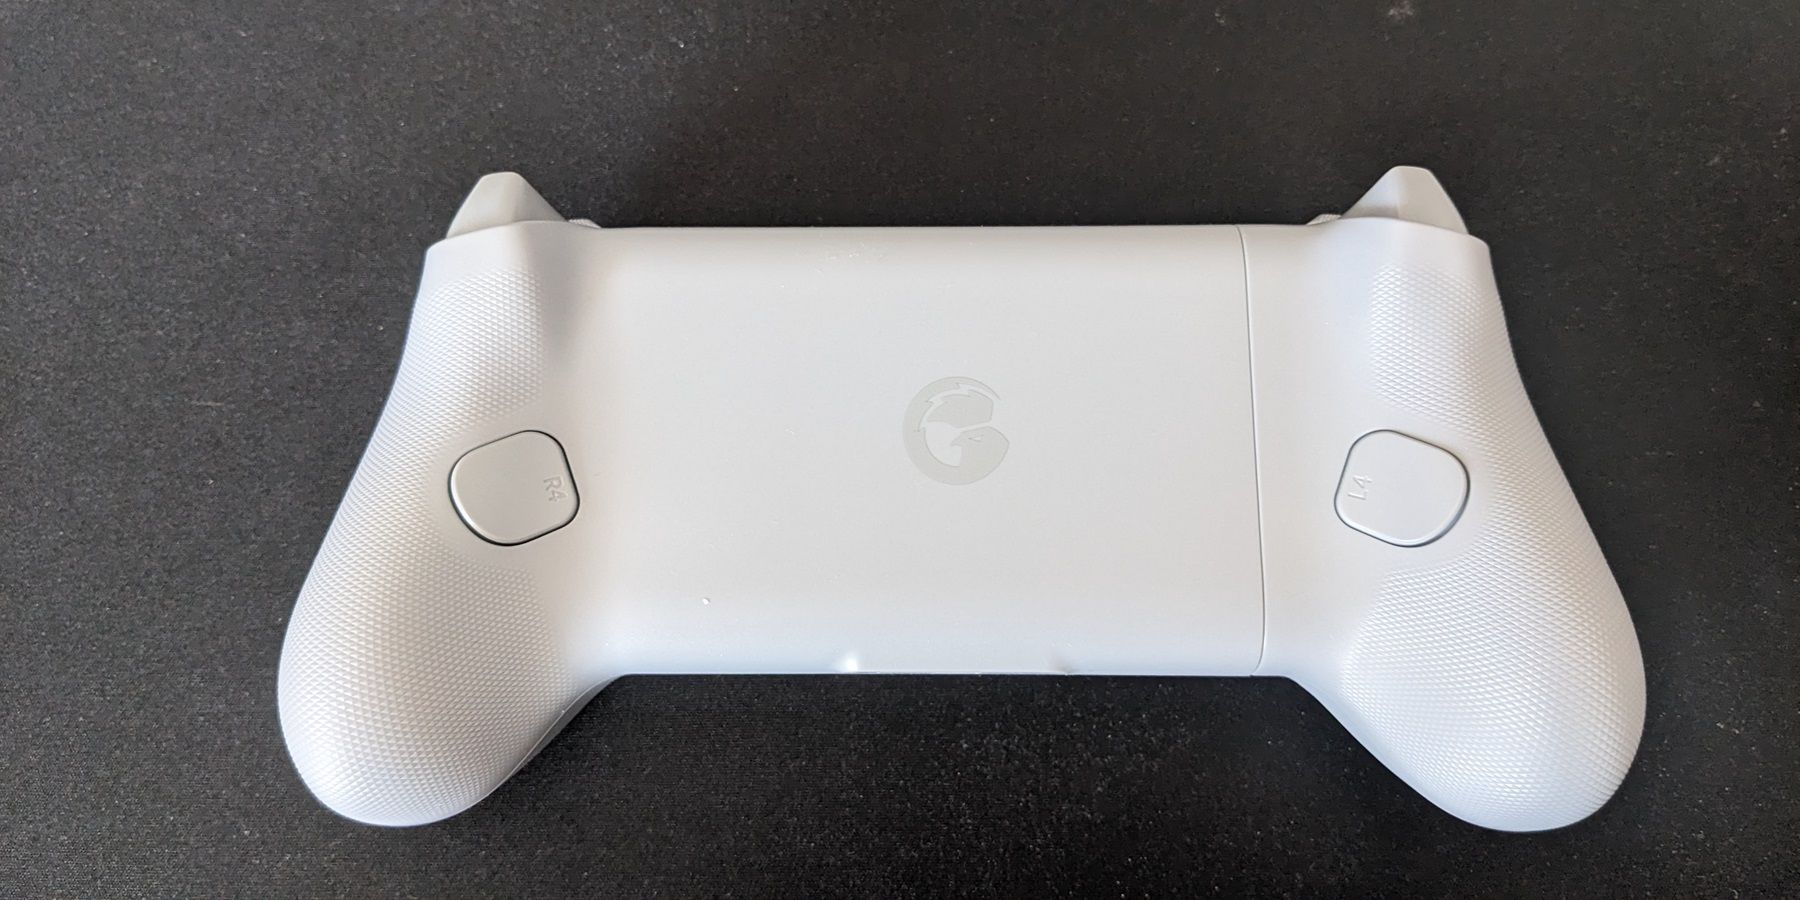 Gamesir G8 Galileo iPhone Controller Review: Slick sliding gaming goodness